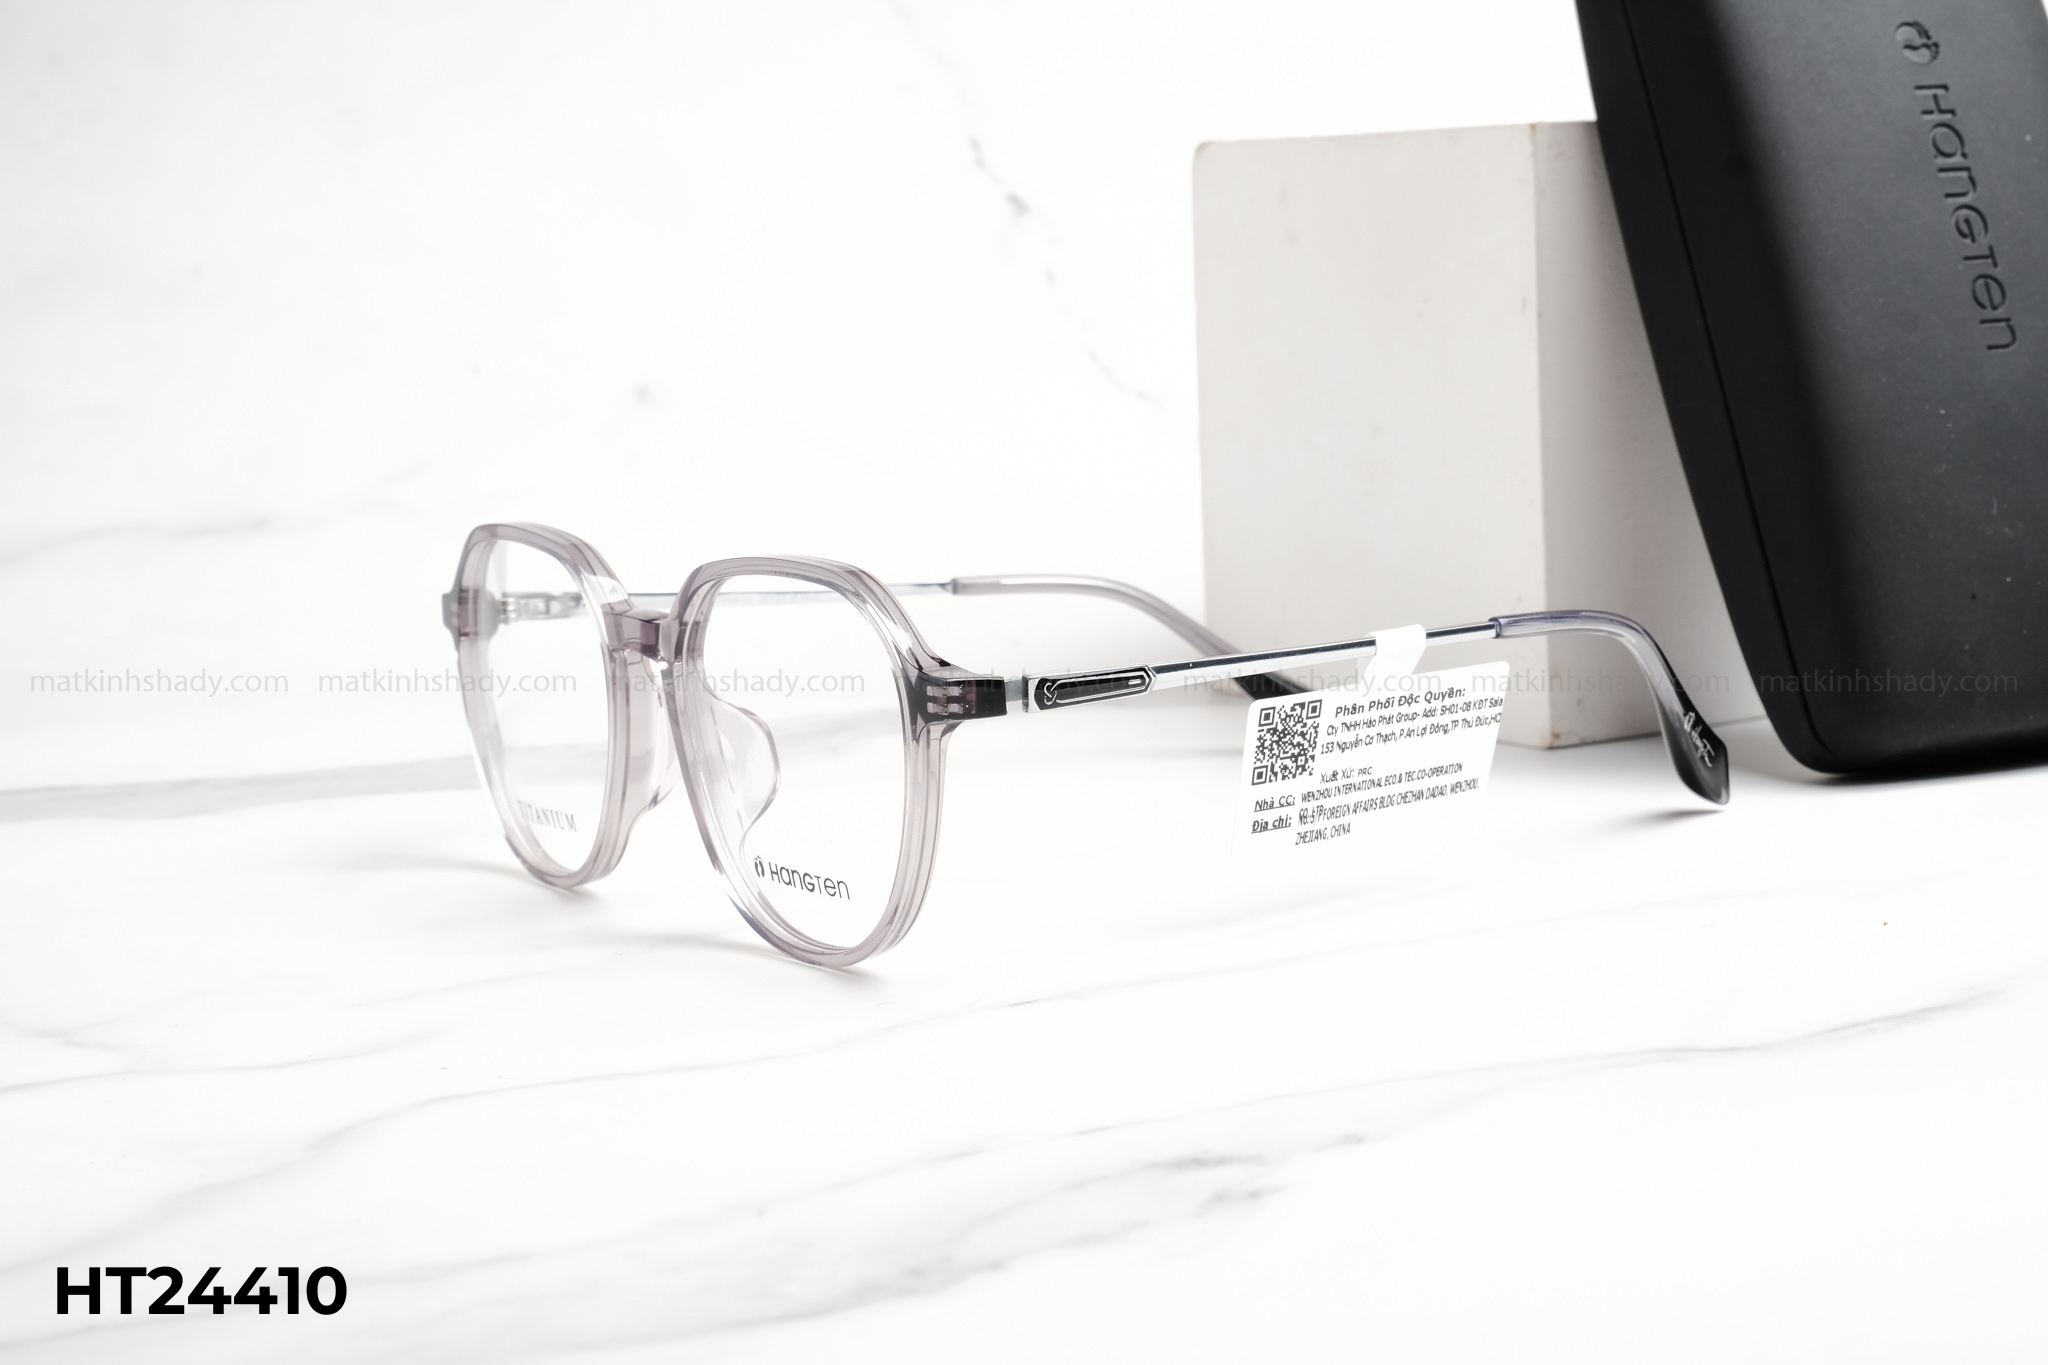  Hangten Eyewear - Glasses - HT24410 